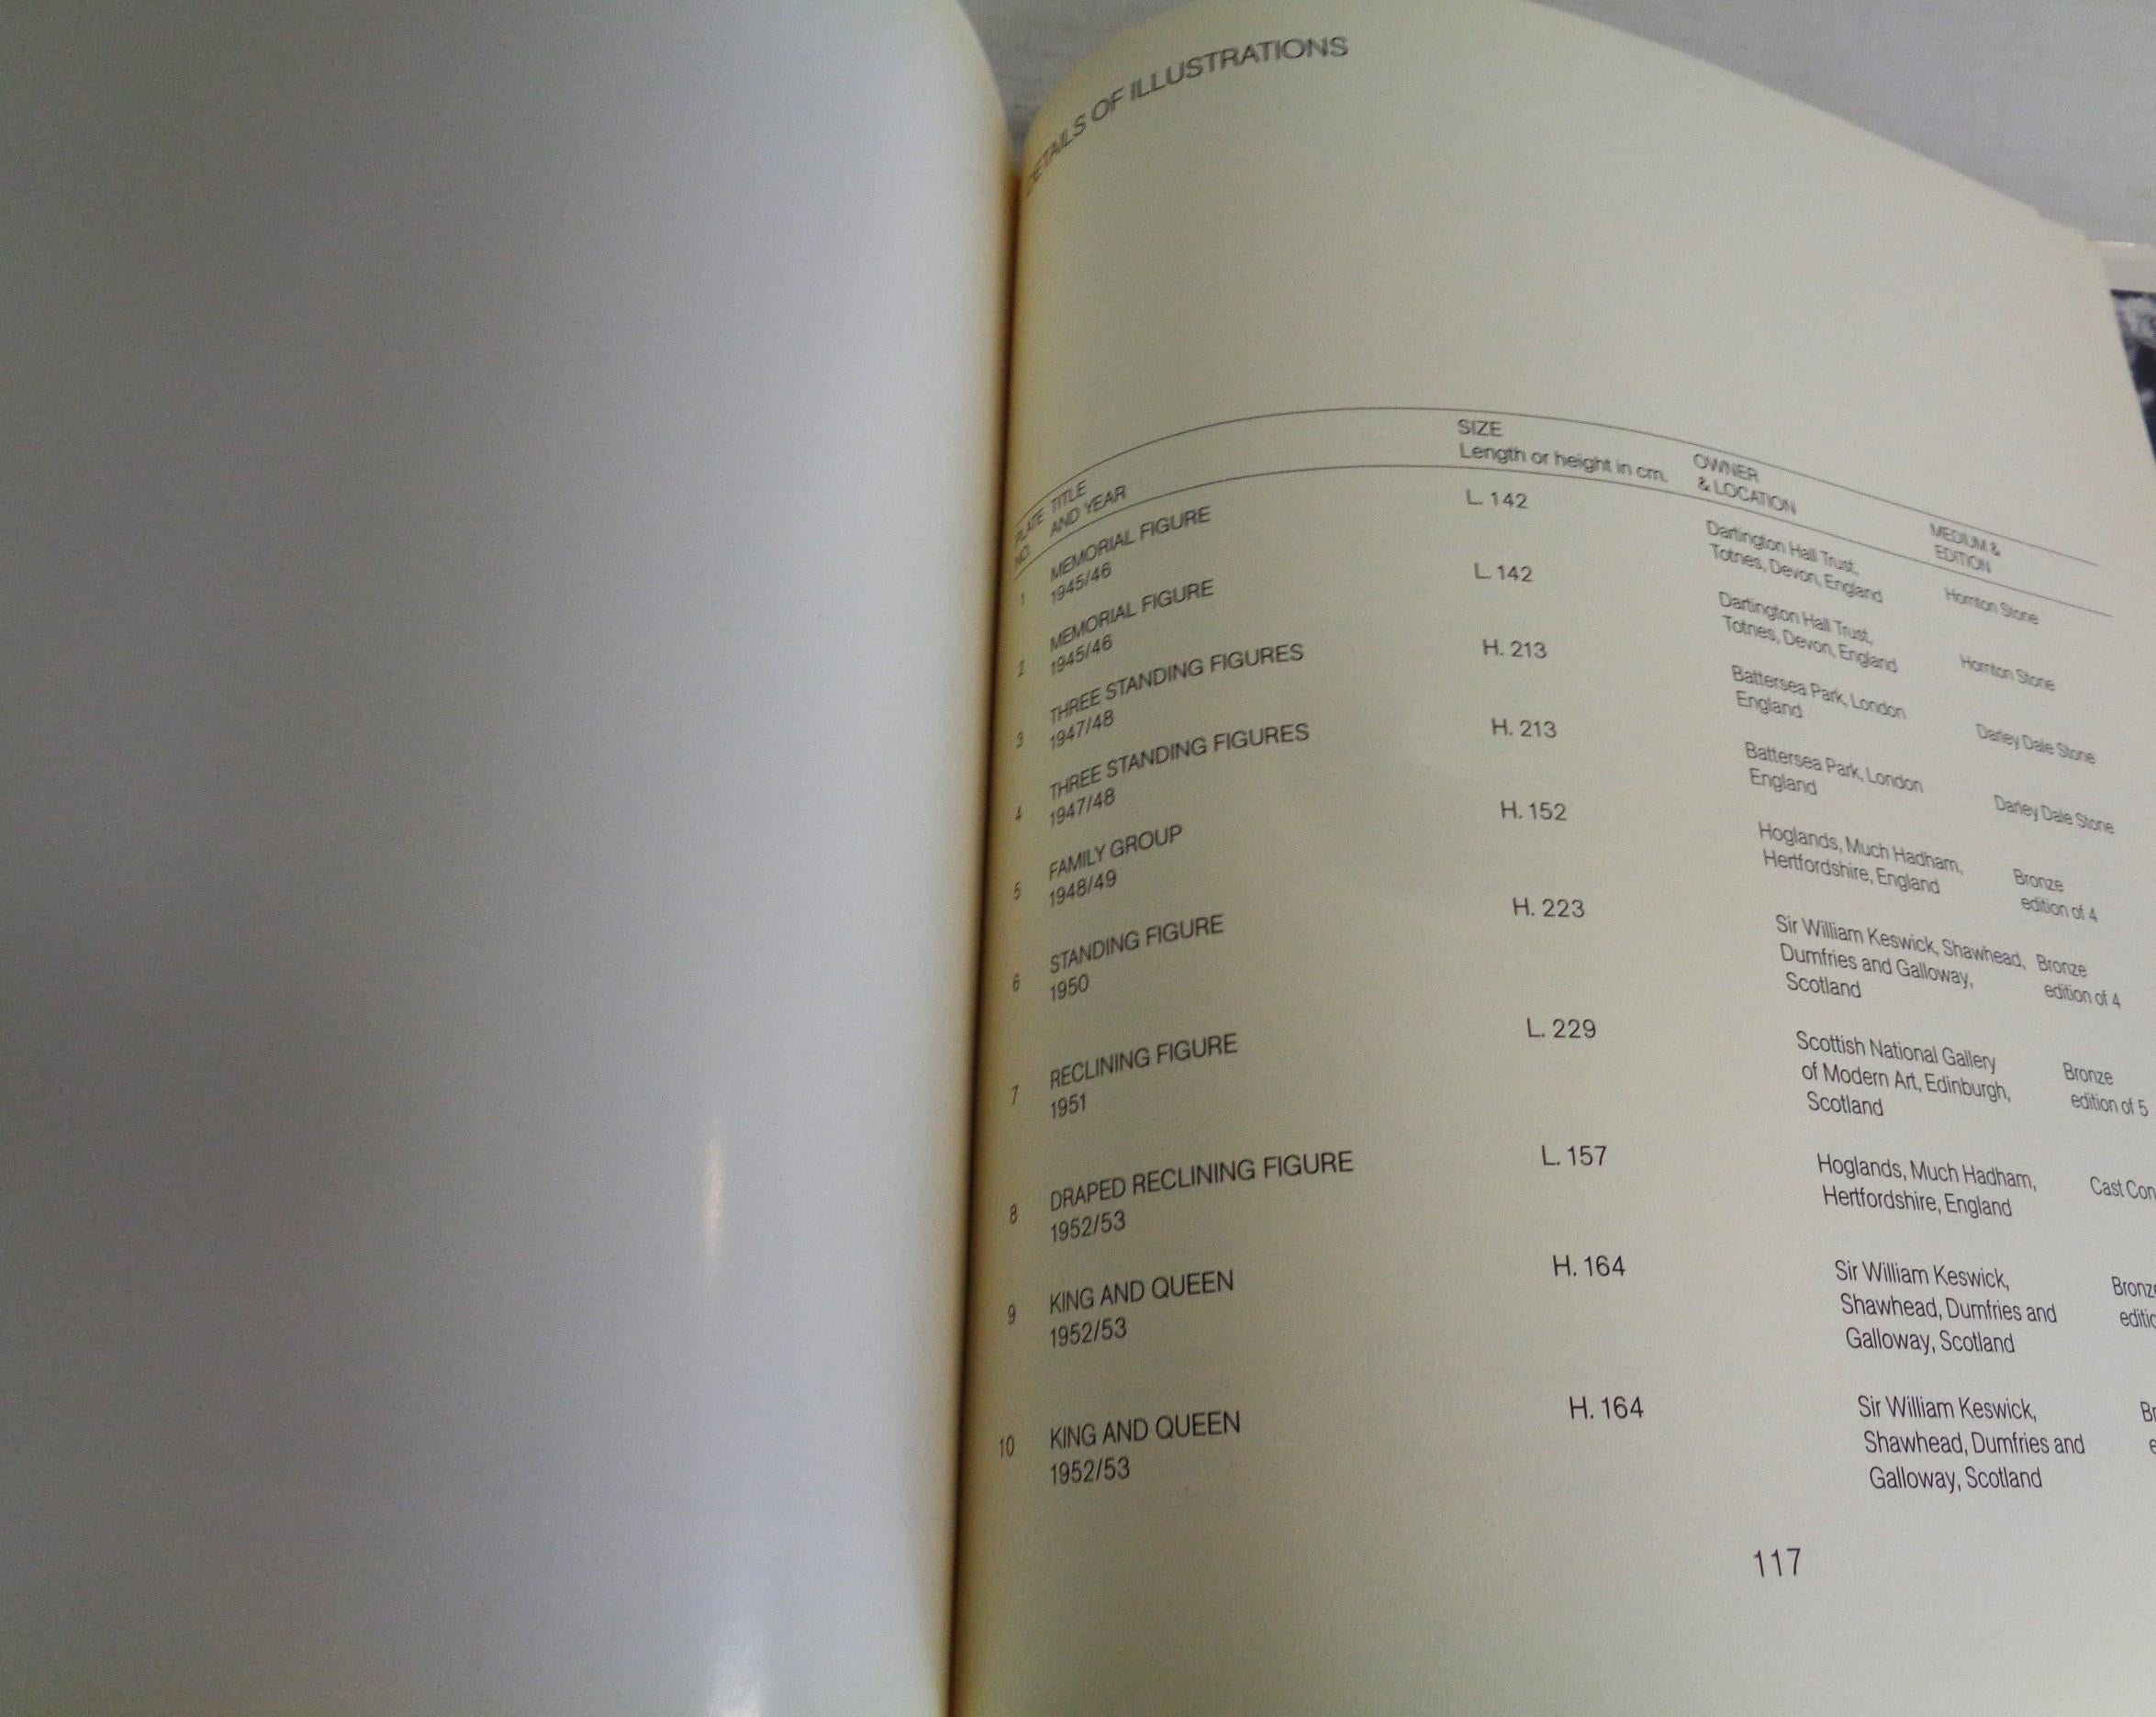 Henry Moore Sculptures in Landscape - 1978 Clarkson N. Potter - 1st Edition For Sale 11